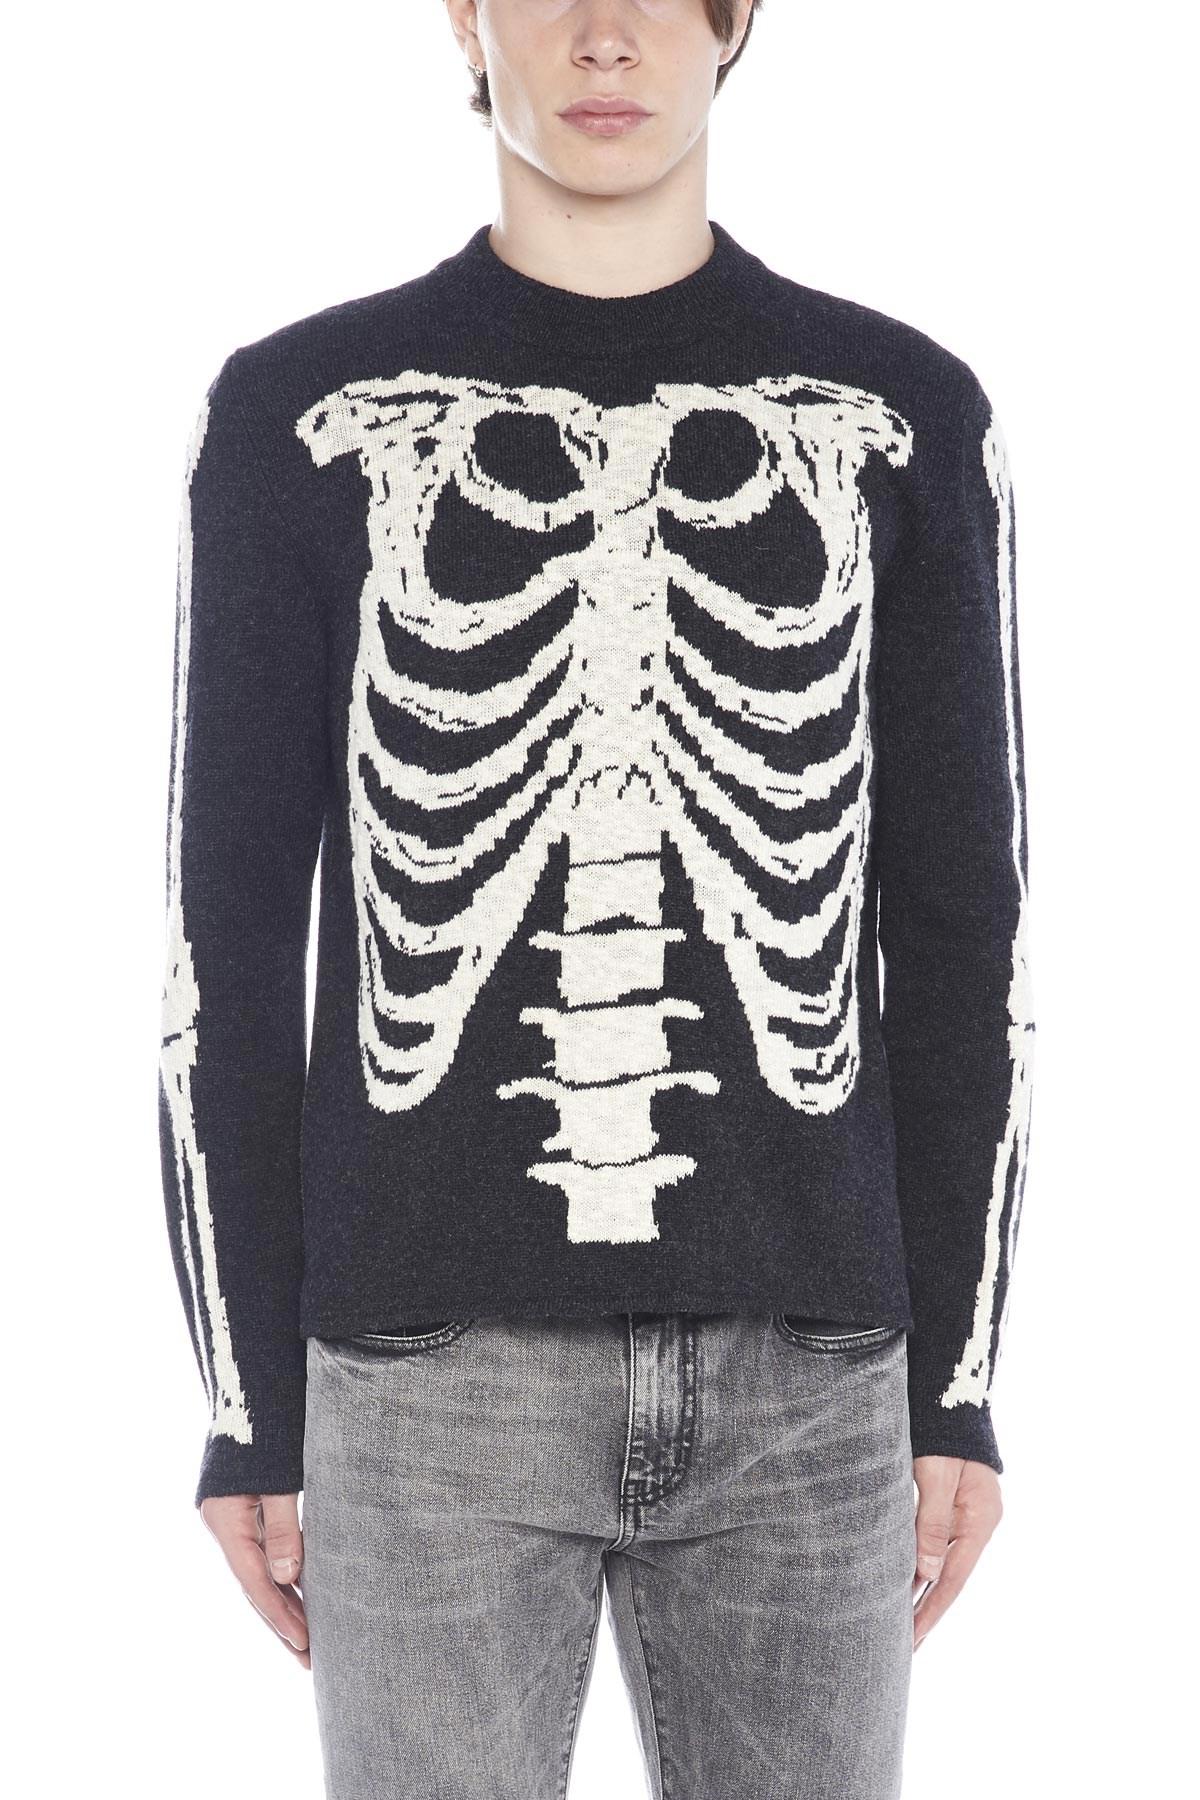 Saint Laurent Wool Jaquard Skeleton Sweater in Blue for Men - Lyst